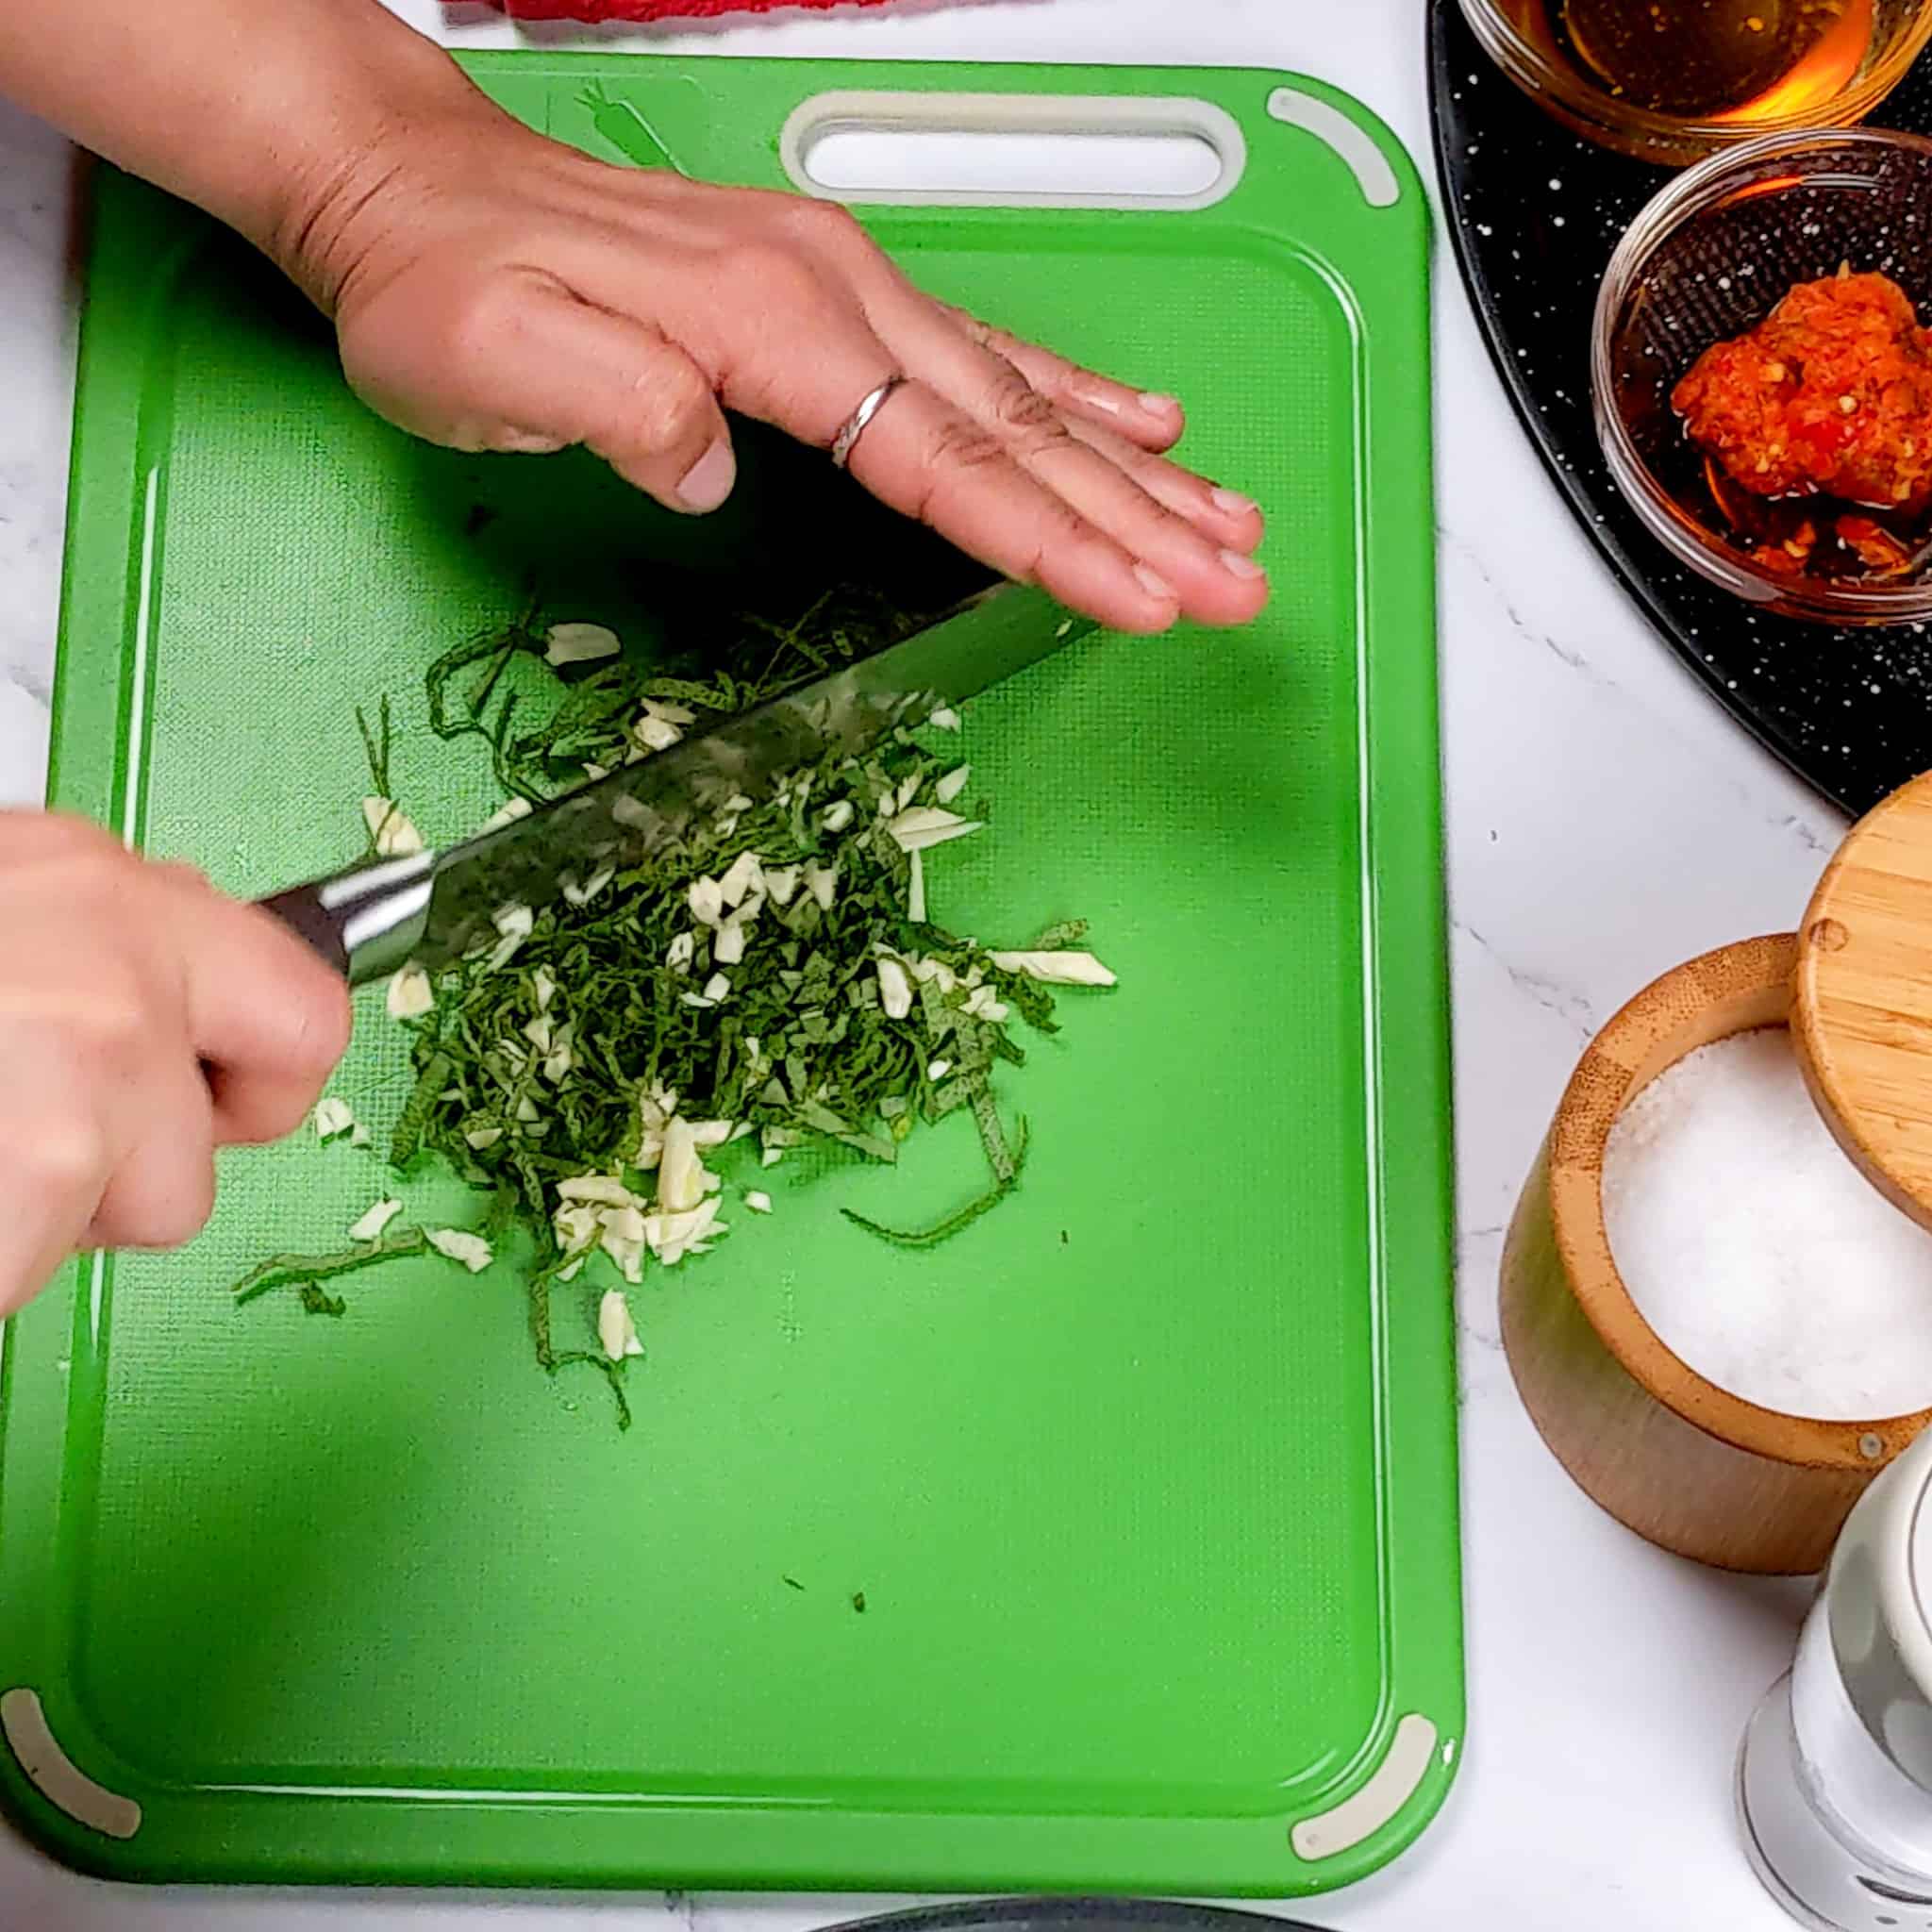 a knife chopping herbs and garlic on a plastic cutting board